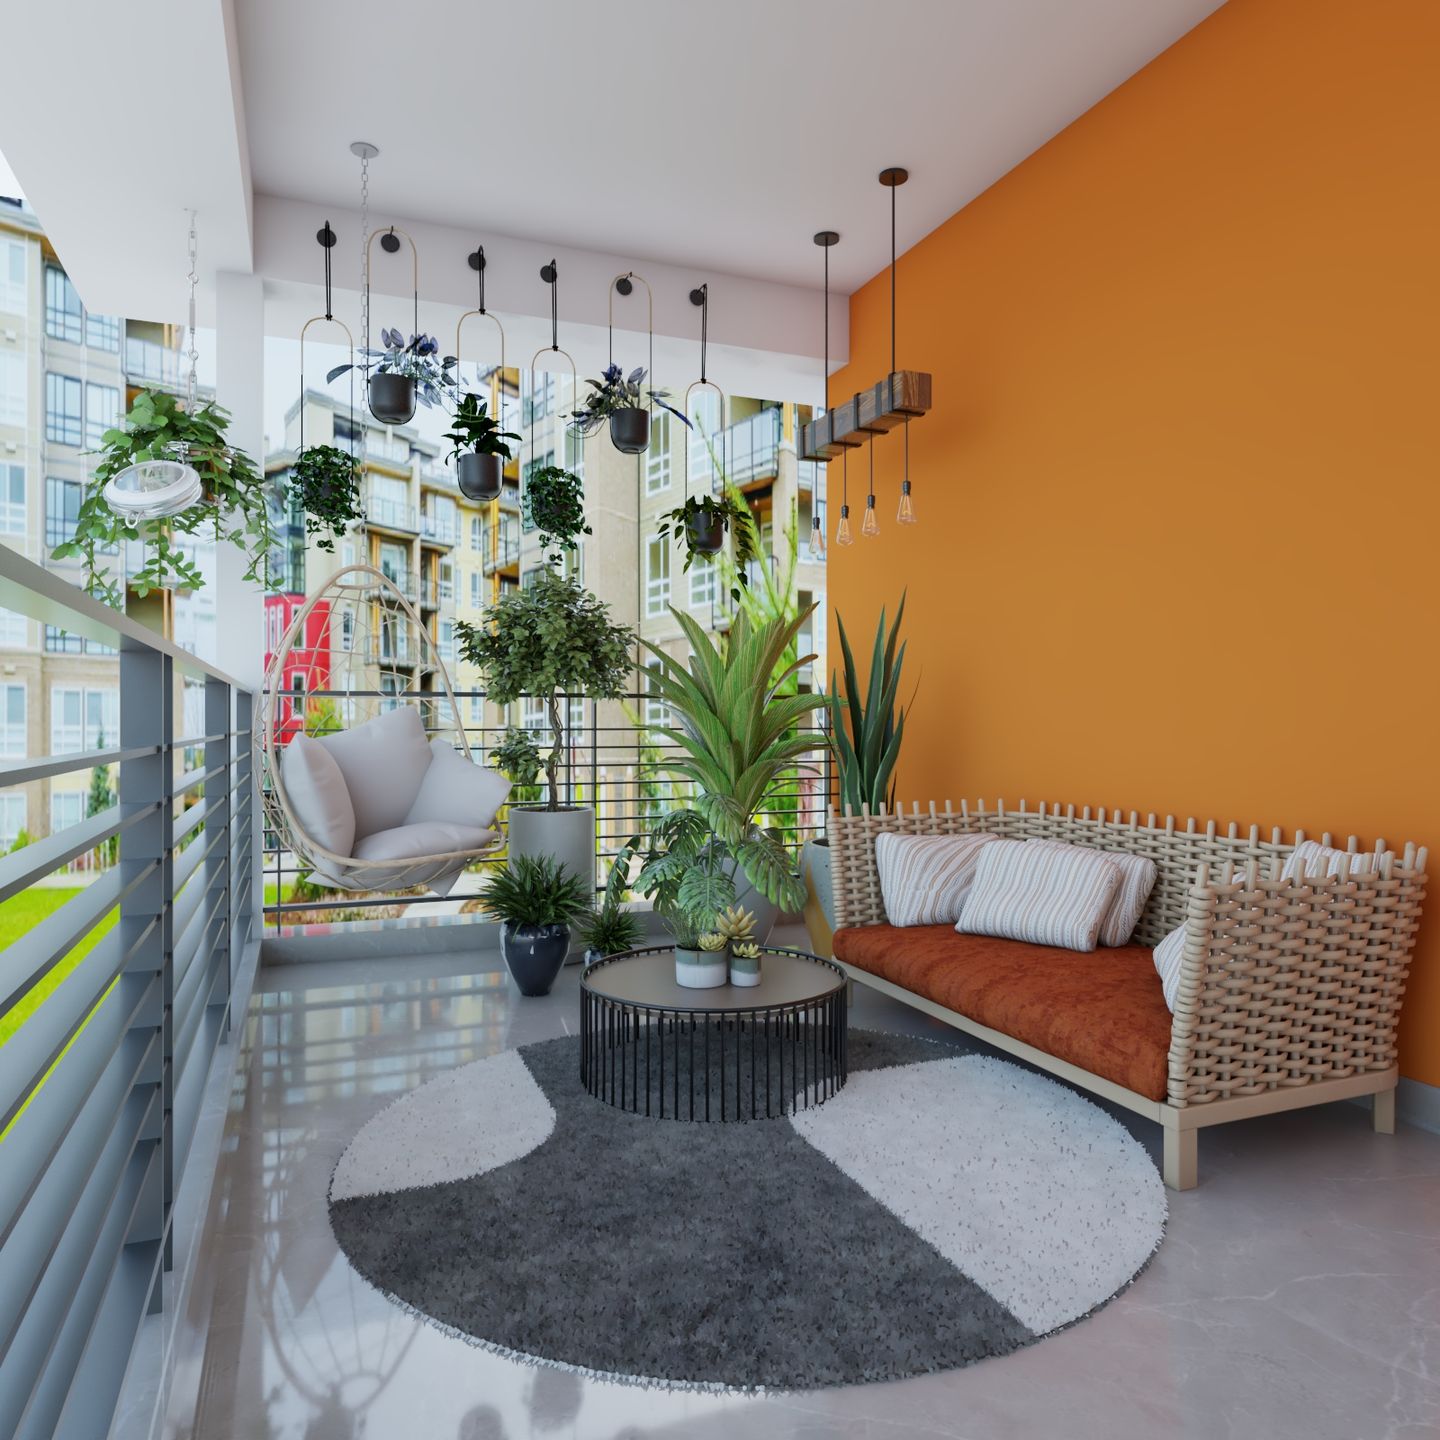 Balcony Design With Orange Wall Paint - Livspace